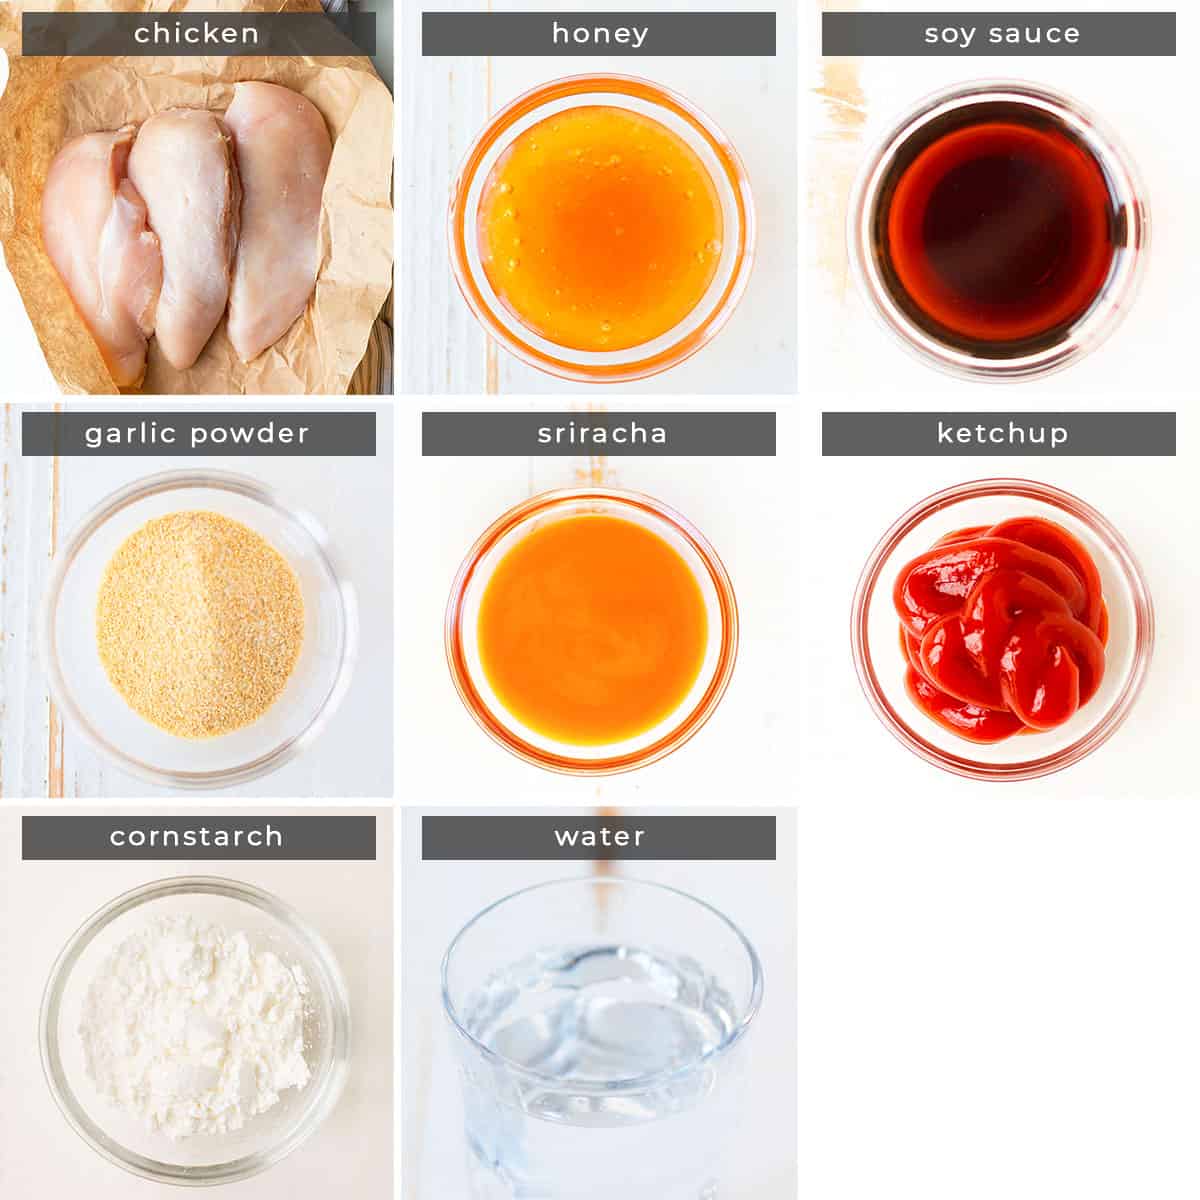 Image showing recipe ingredients chicken, honey, soy sauce, garlic powder, sriracha, ketchup, cornstarch, and water. 